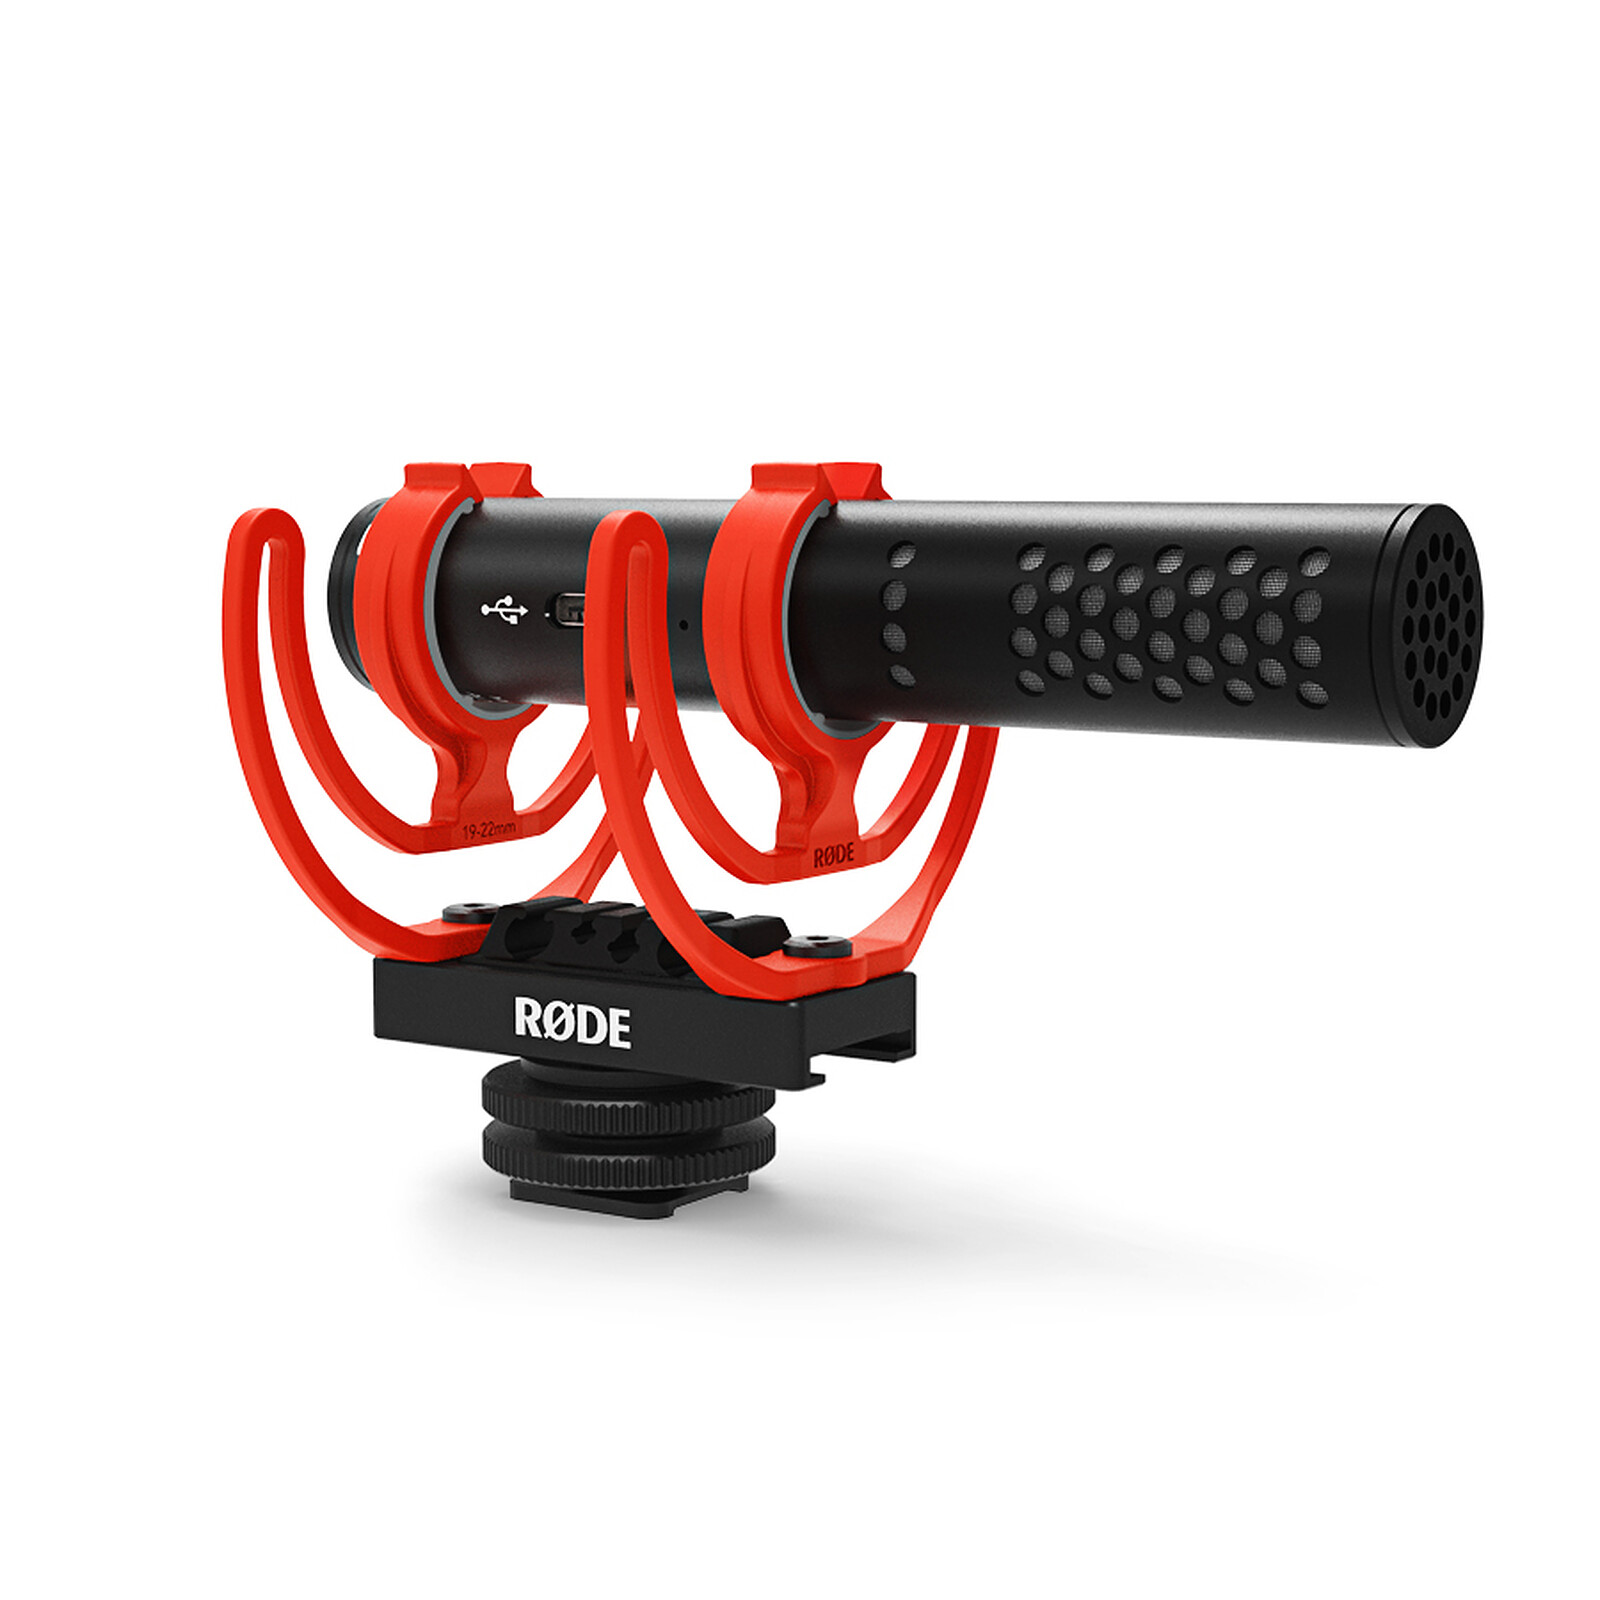 Rode VideoMic Pro Rycote micro directionnel pour caméra